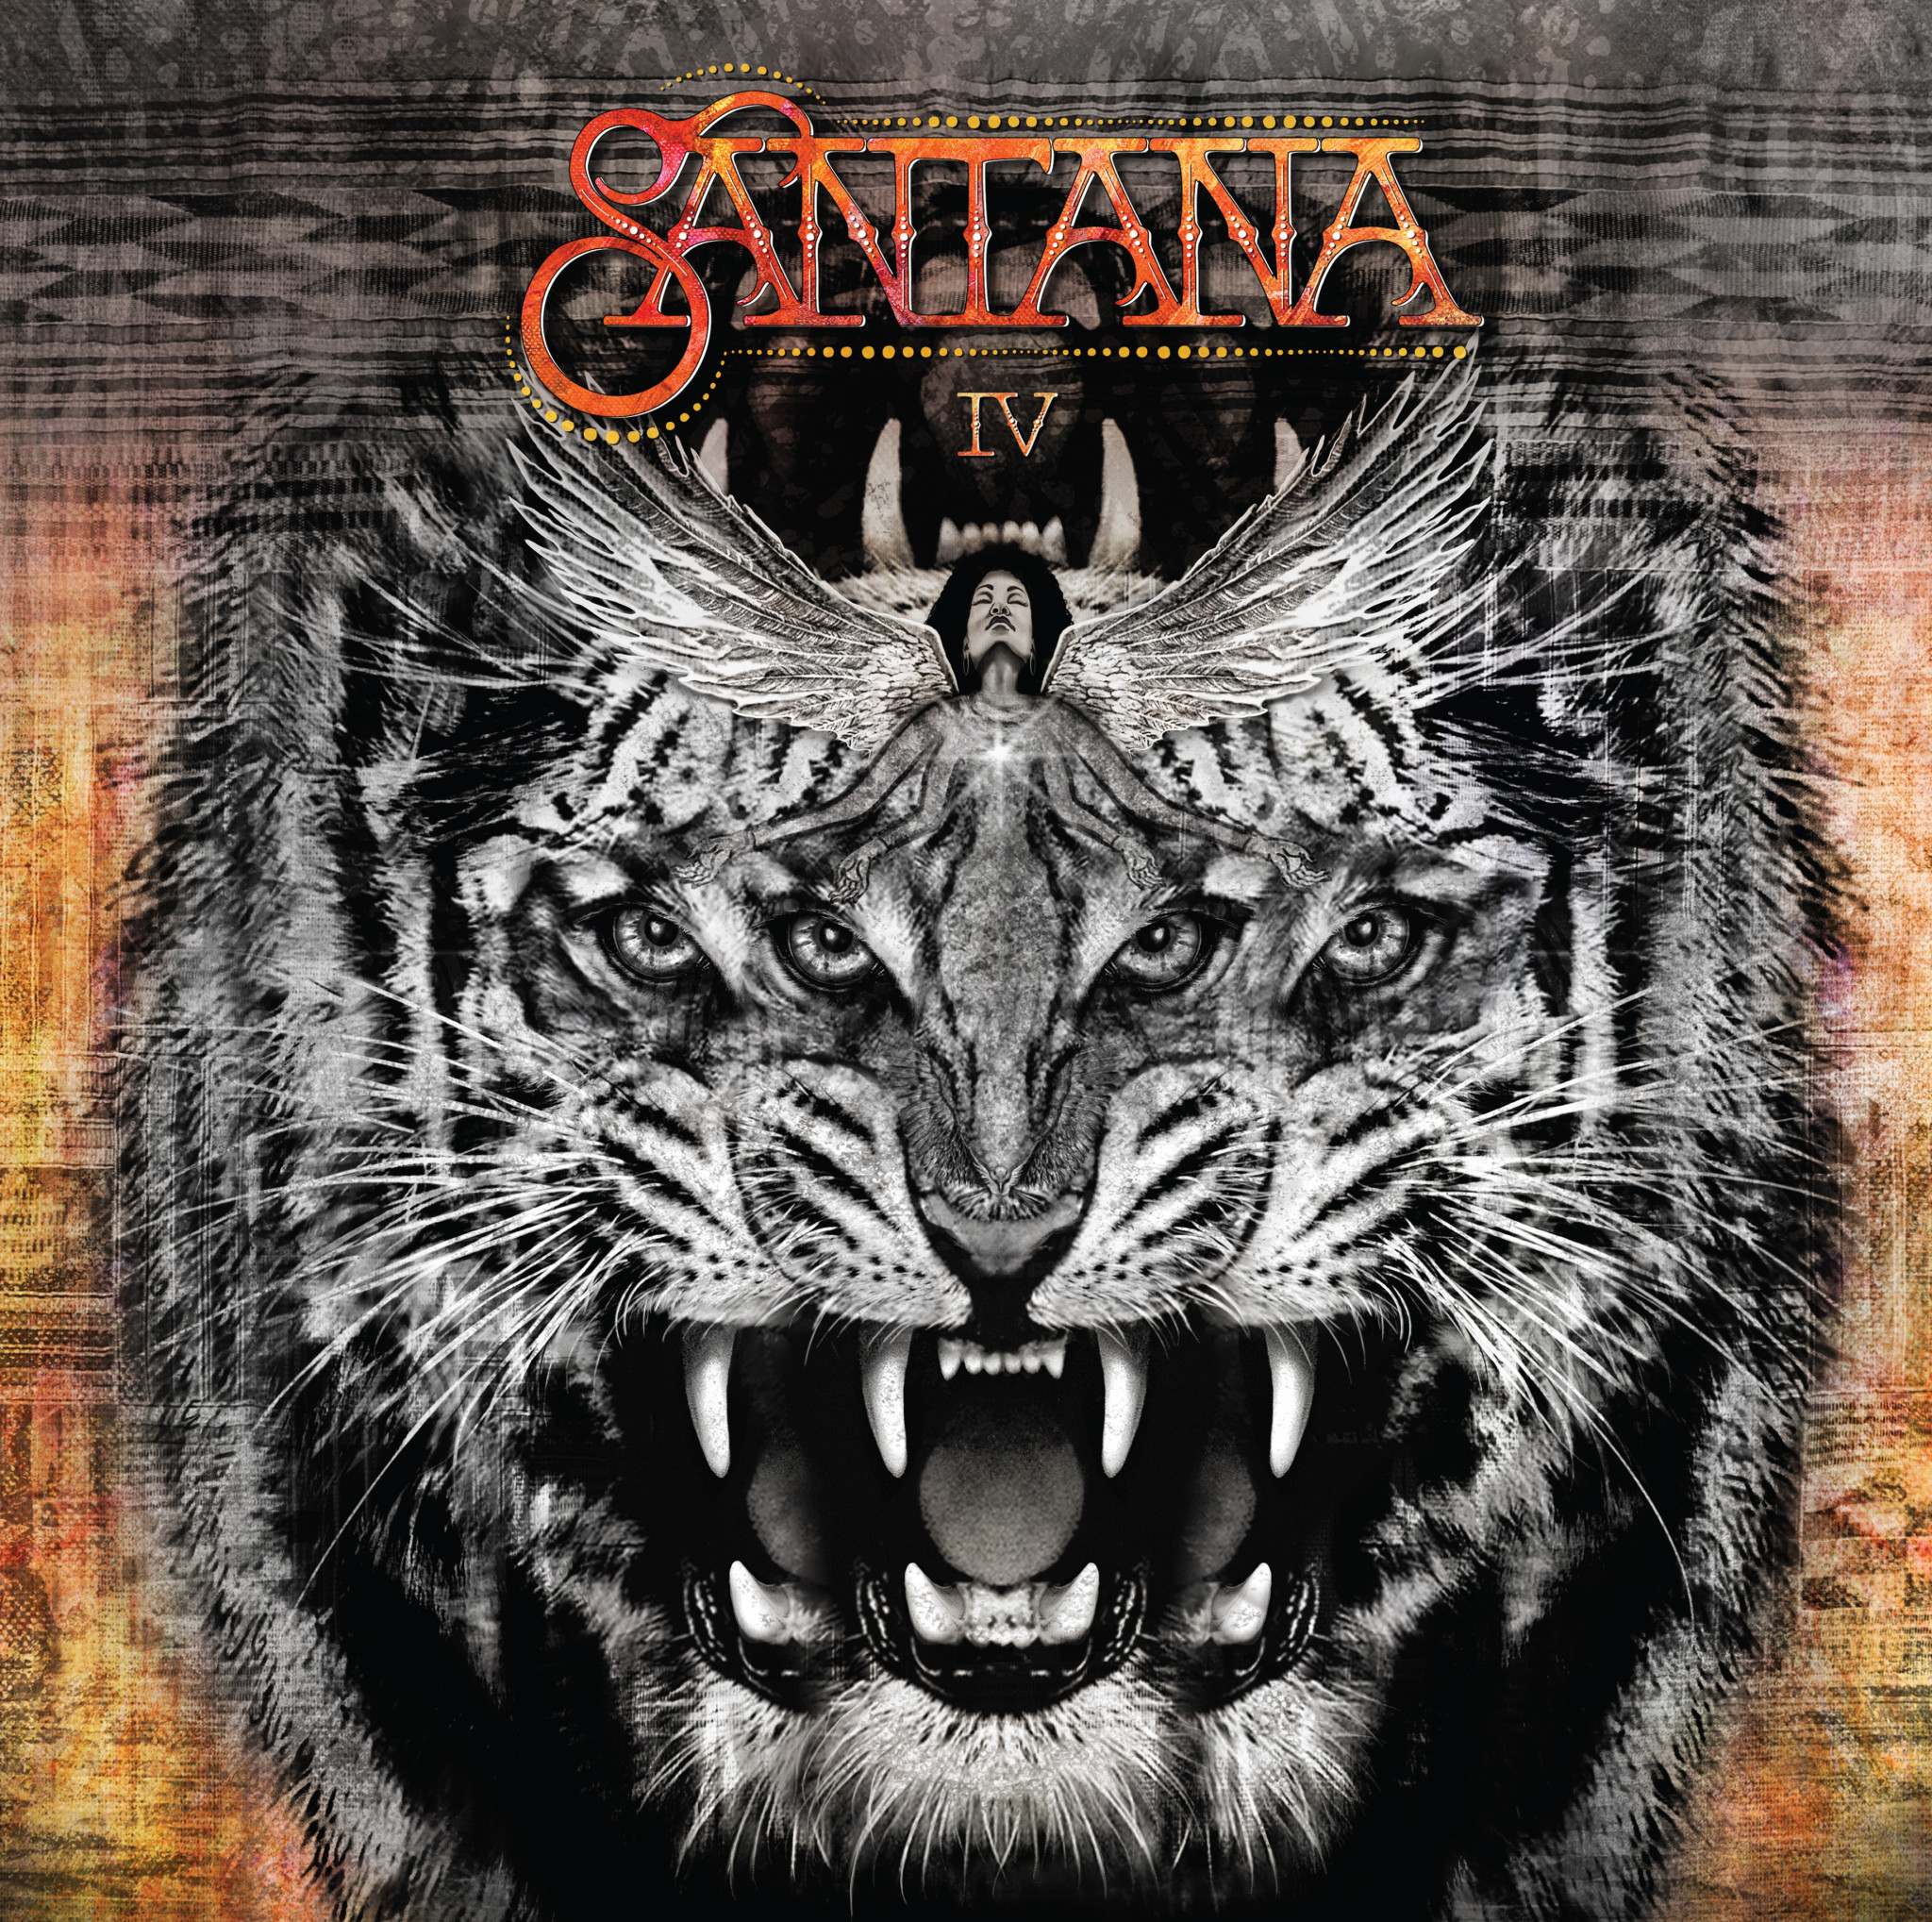 Santana IV Carlos Santana’s Latest Effort Brings Back Classic Band